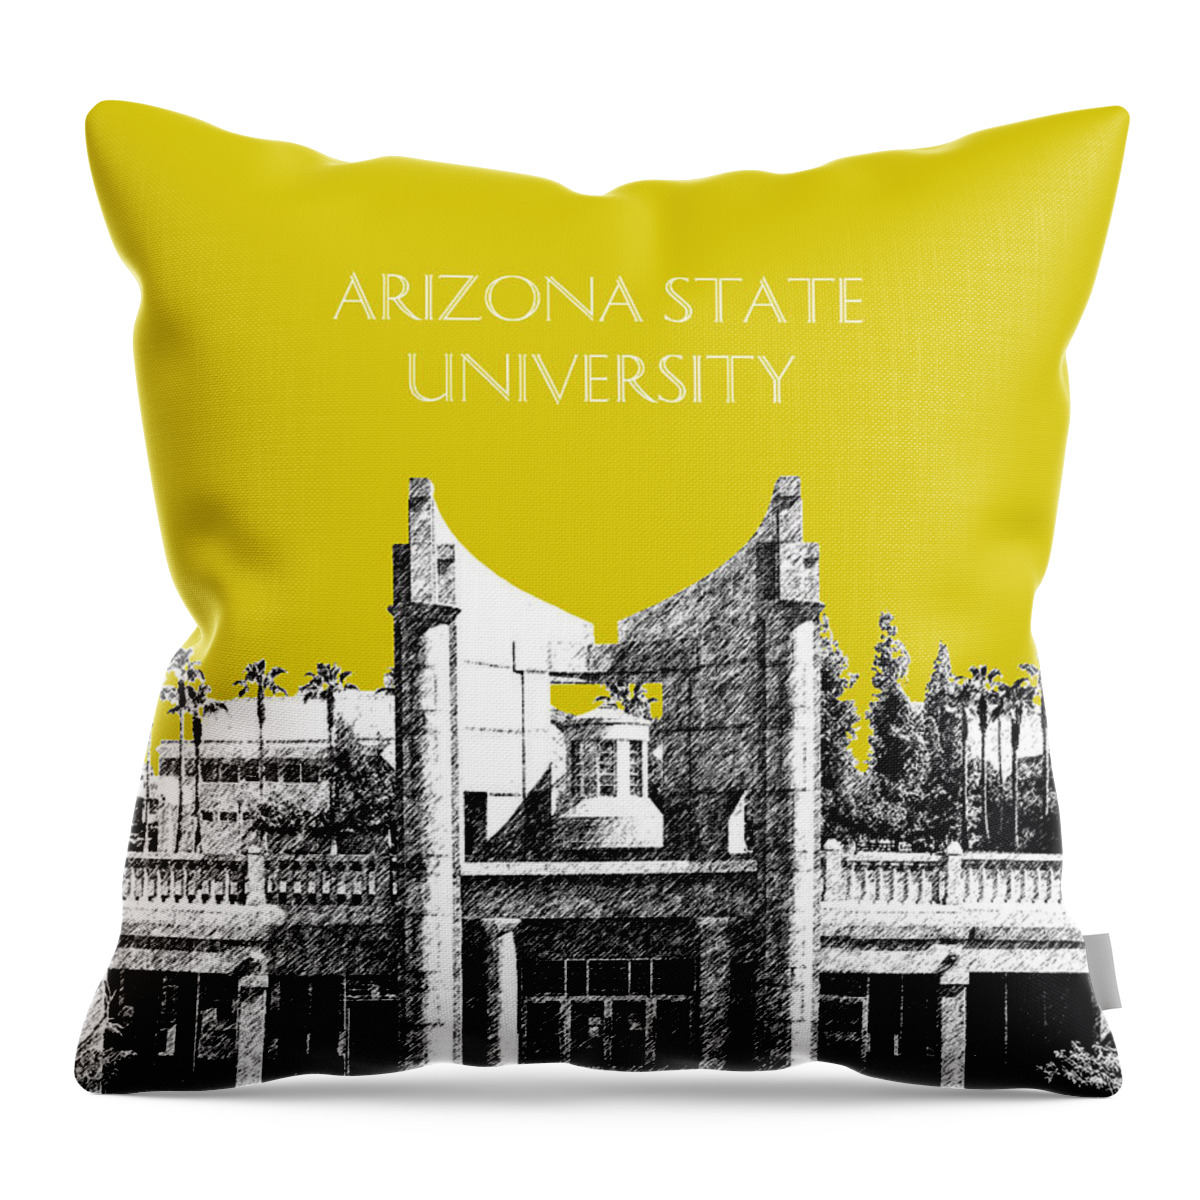 University Throw Pillow featuring the digital art Arizona State University 2 - Hayden Library - Mustard Yellow by DB Artist